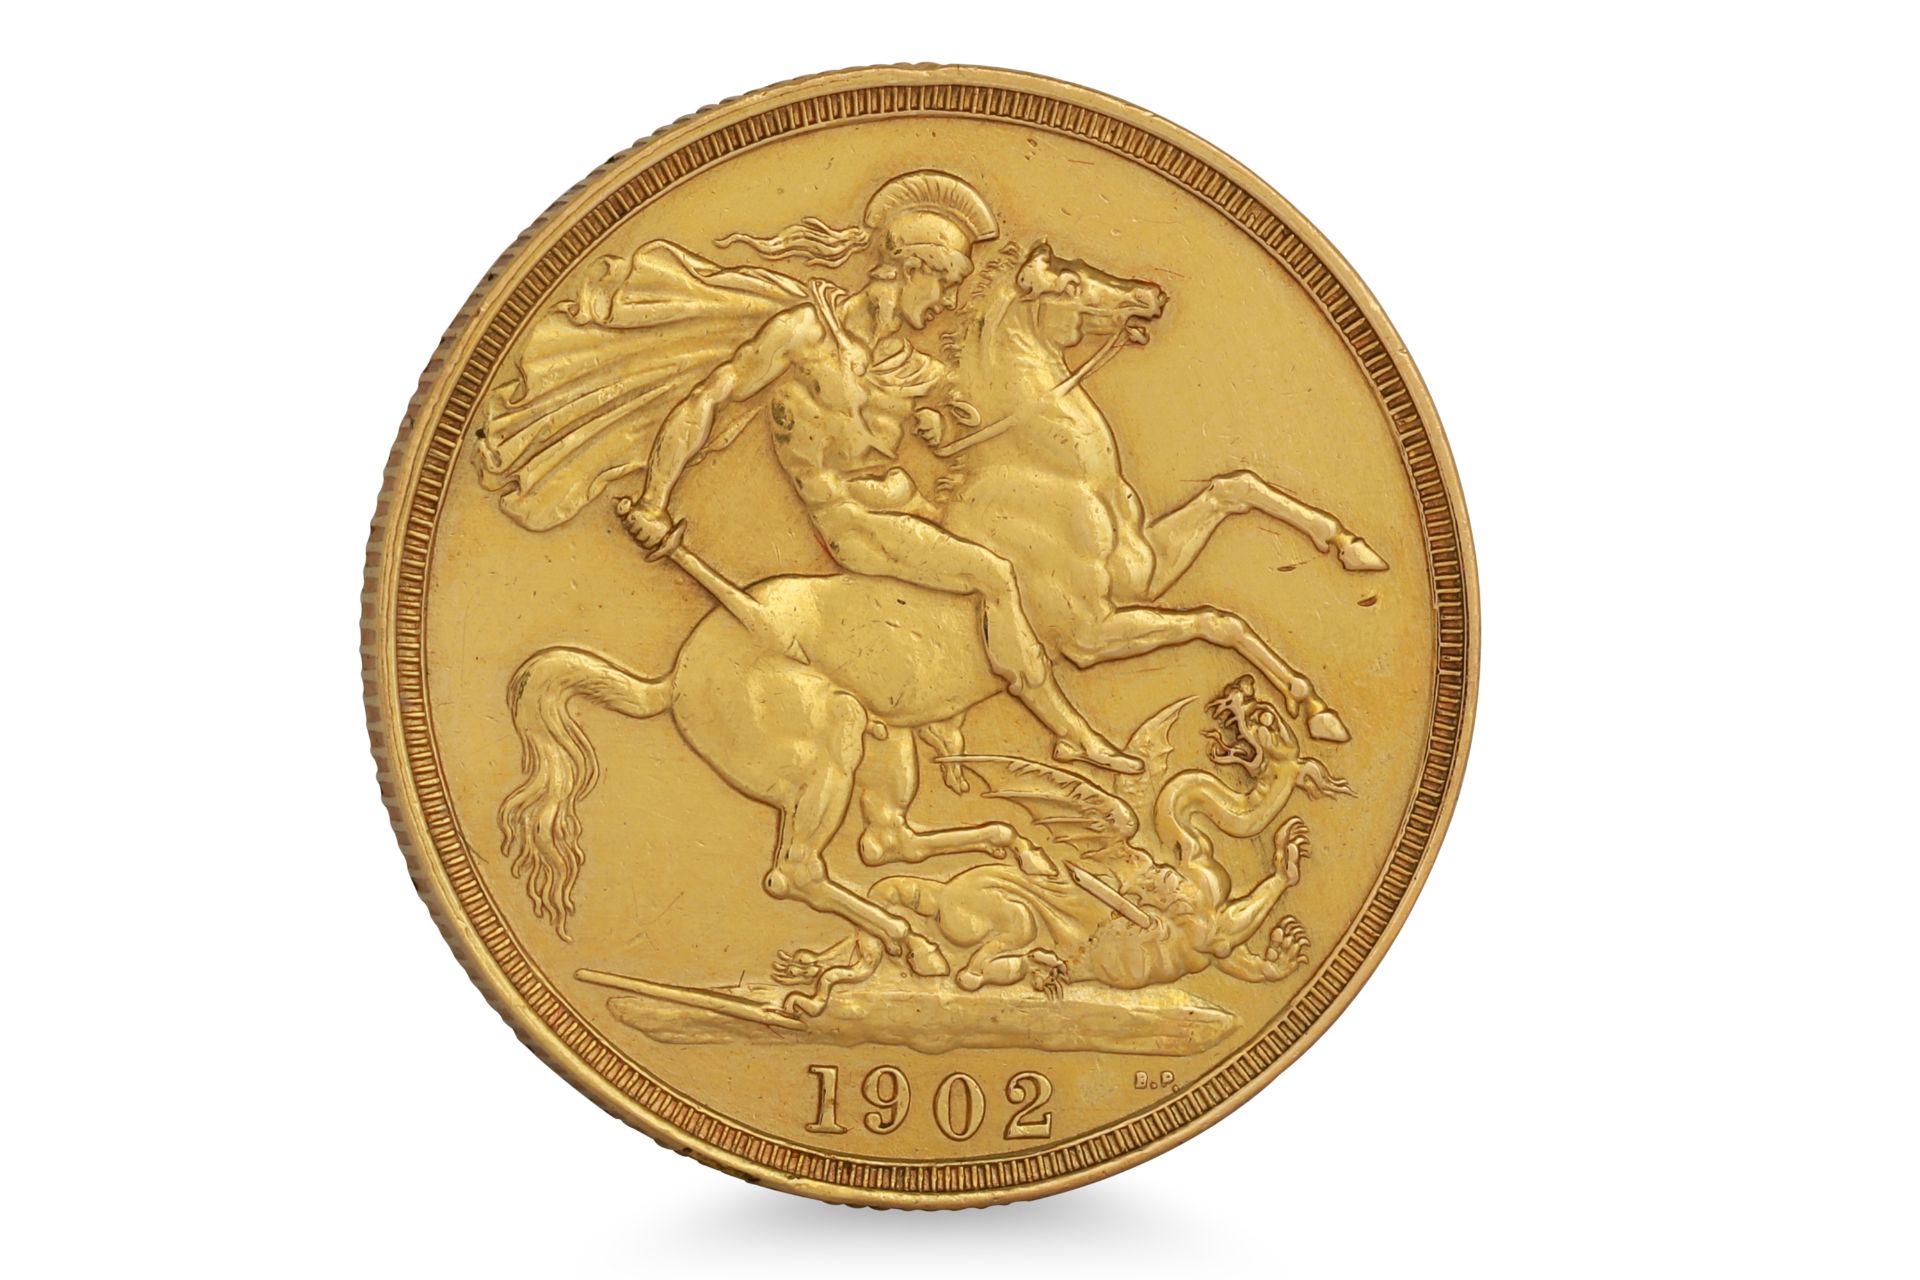 A 1902 EDWARD II £2 - DOUBLE SOVEREIGN ENGLISH GOLD COIN, VF, 22 ct. 16 g.